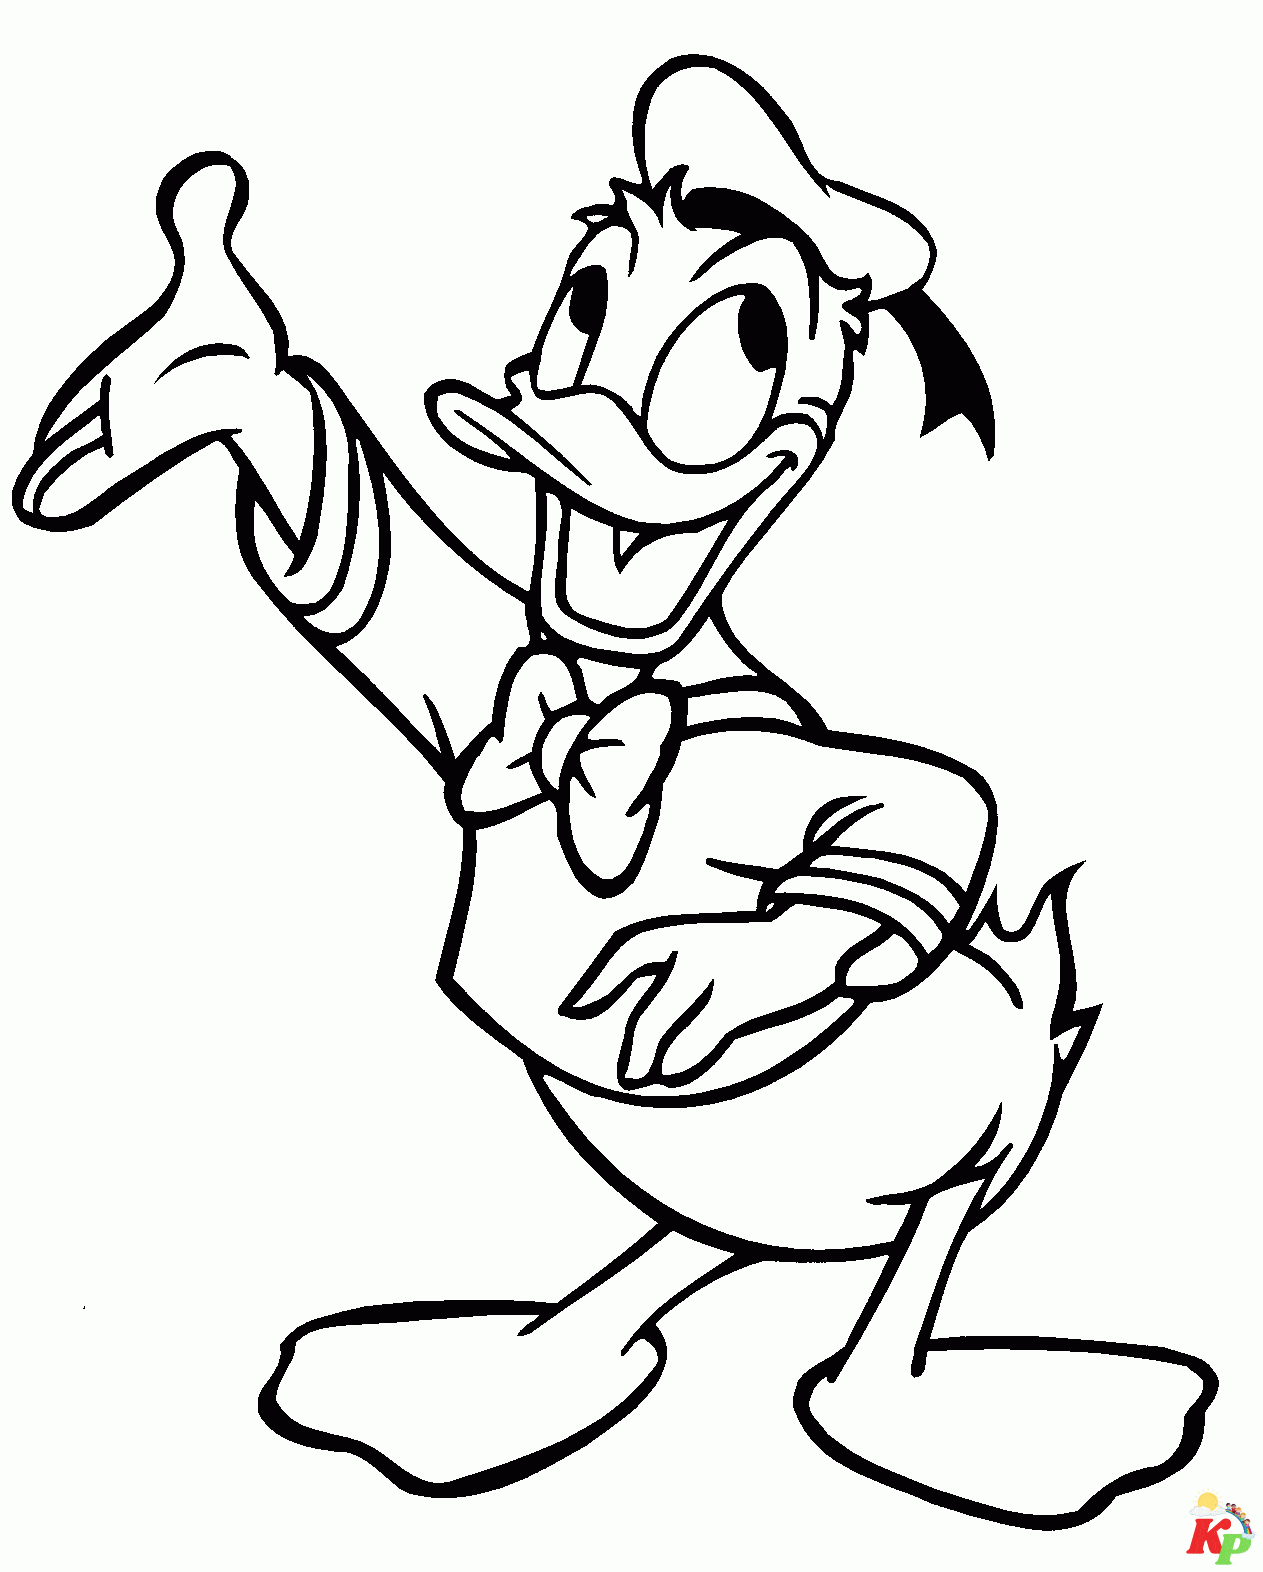 Donald Duck (5)